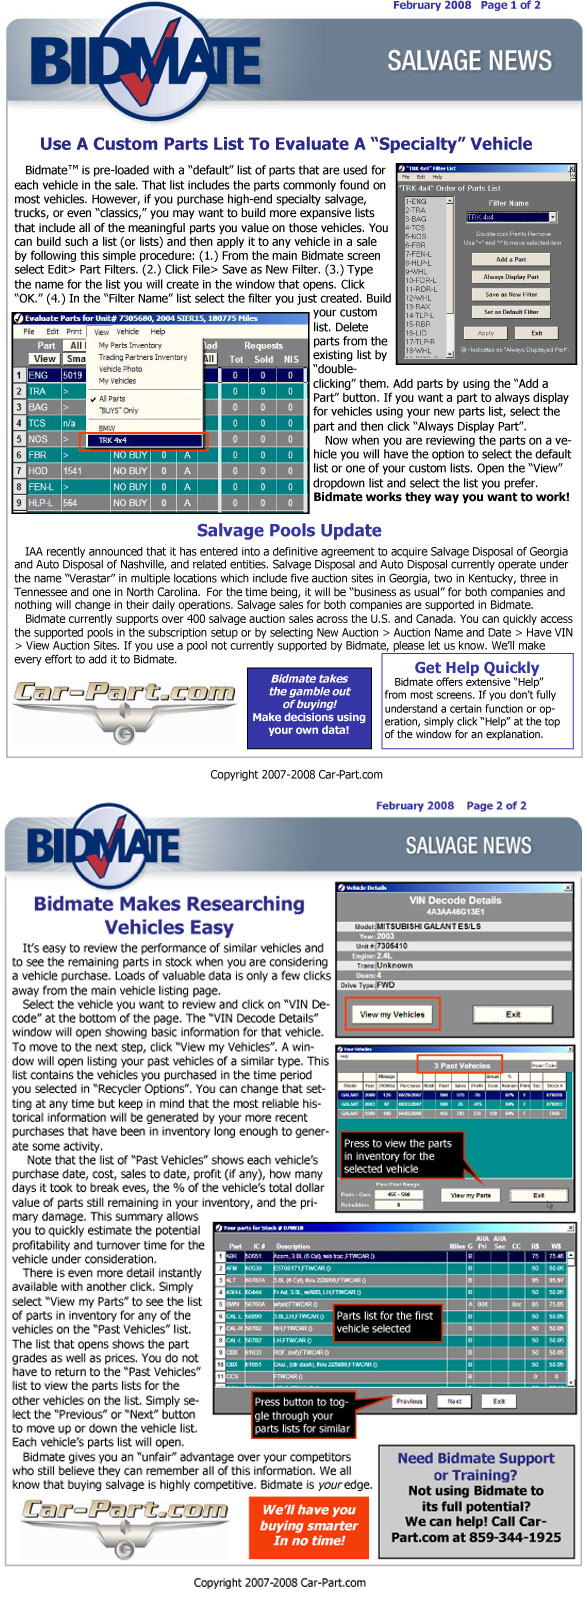 Bidmate Salvage News - February 2008